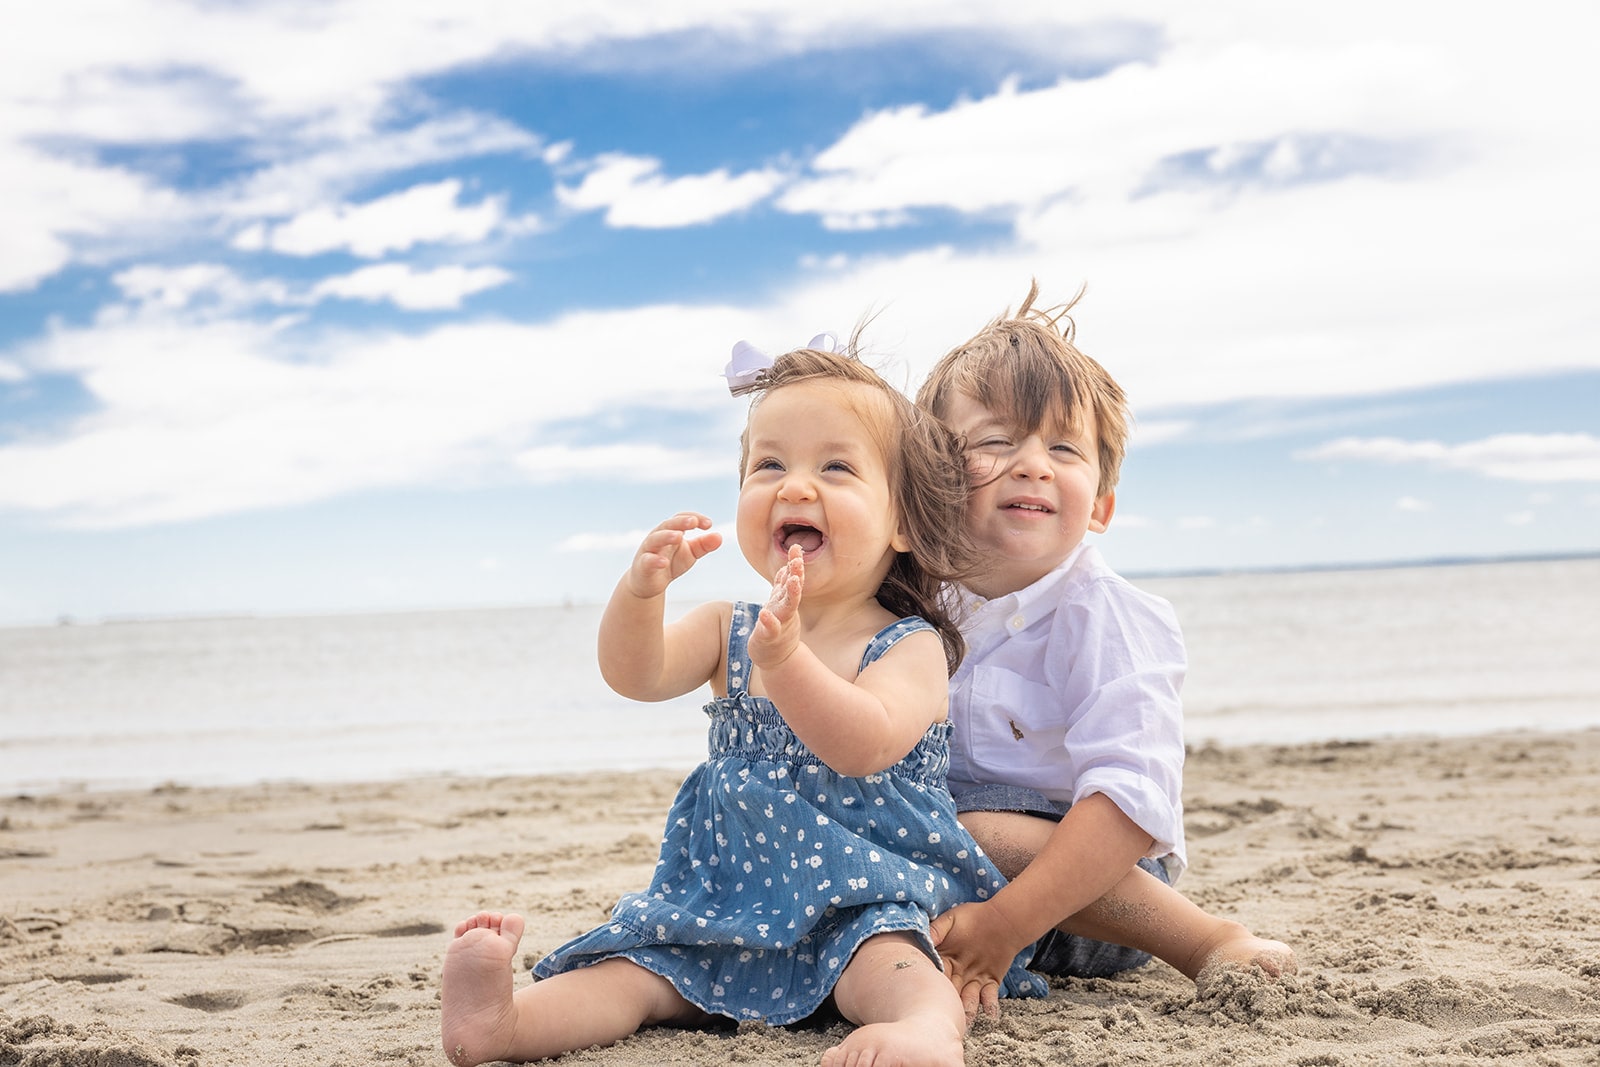 Lindsay Doyle's children sittig on beach together